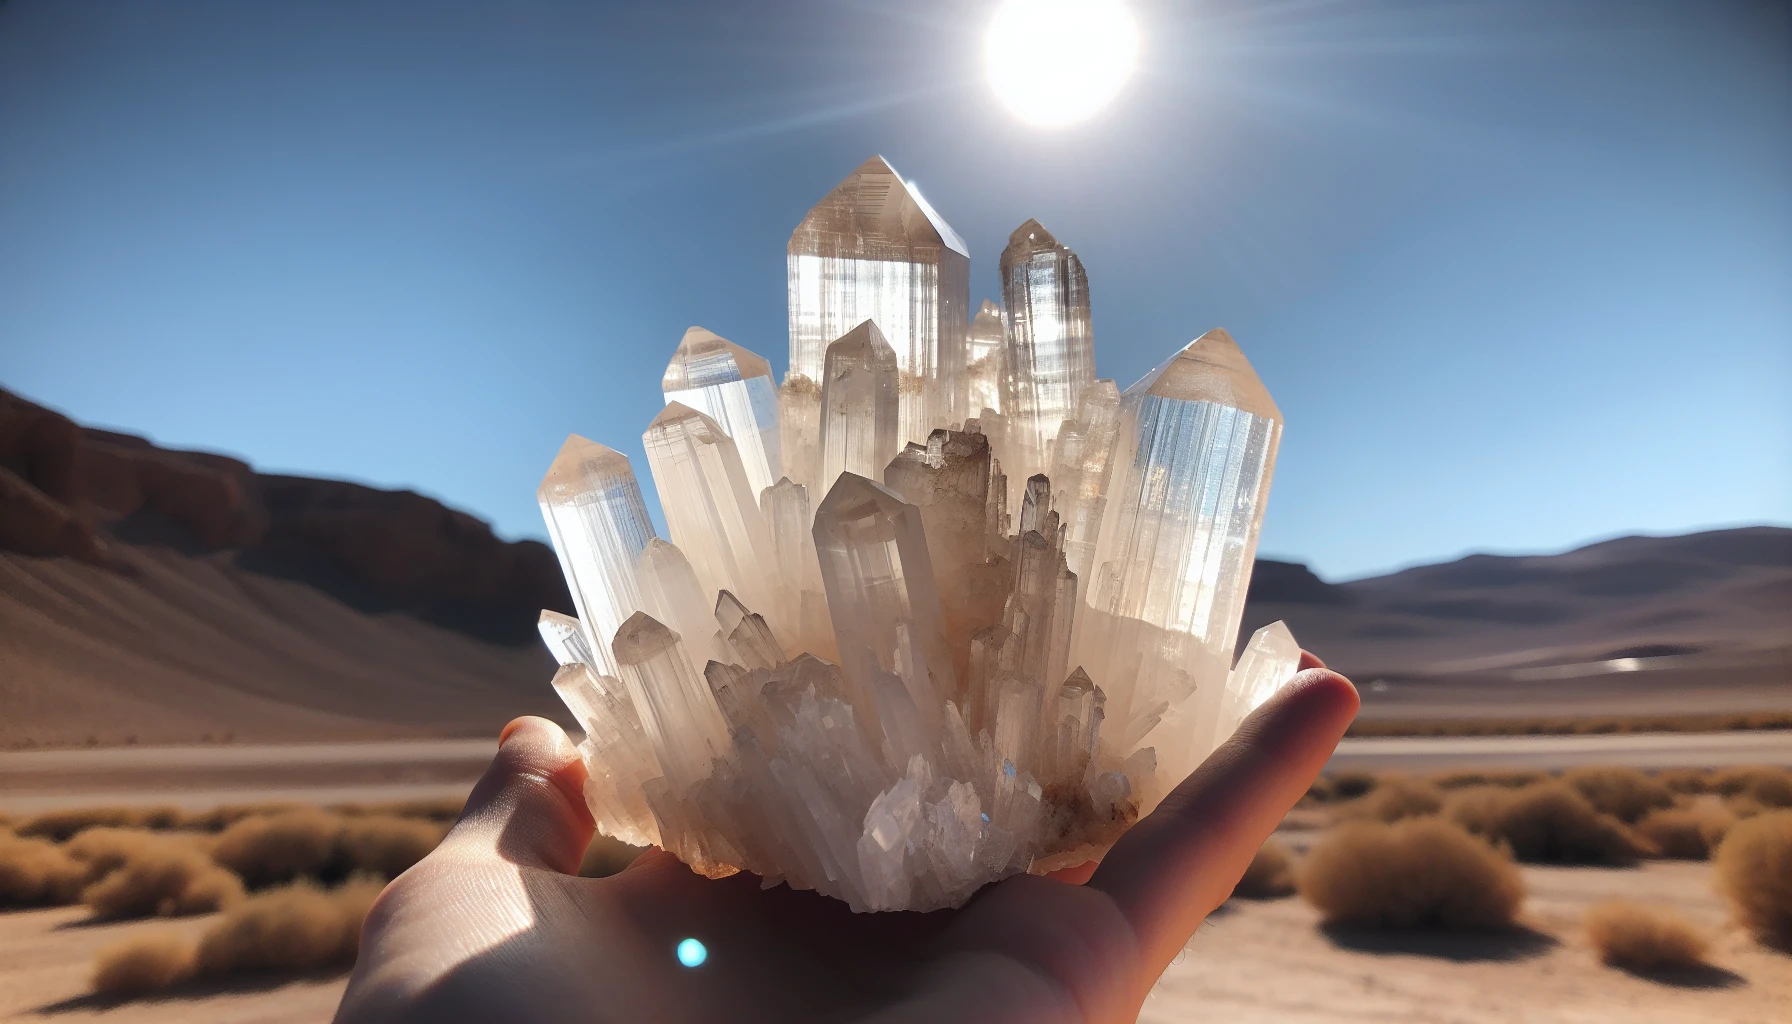 Selenite crystals in direct sunlight